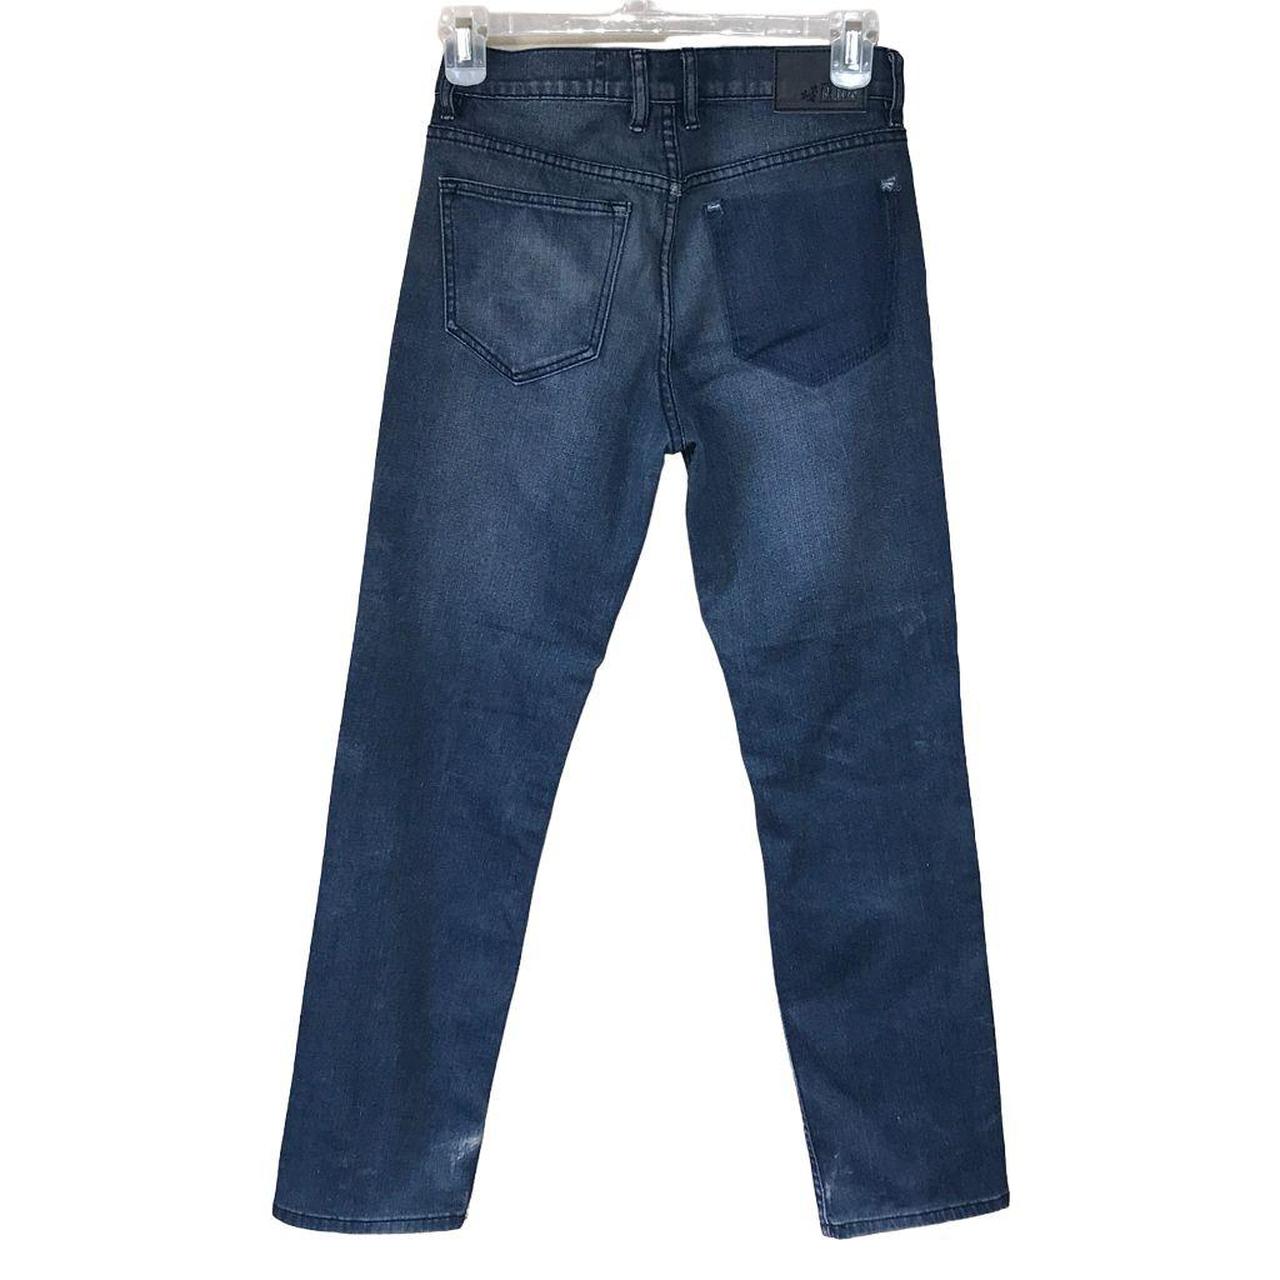 Product Image 4 - Rude XXX mens denim jeans